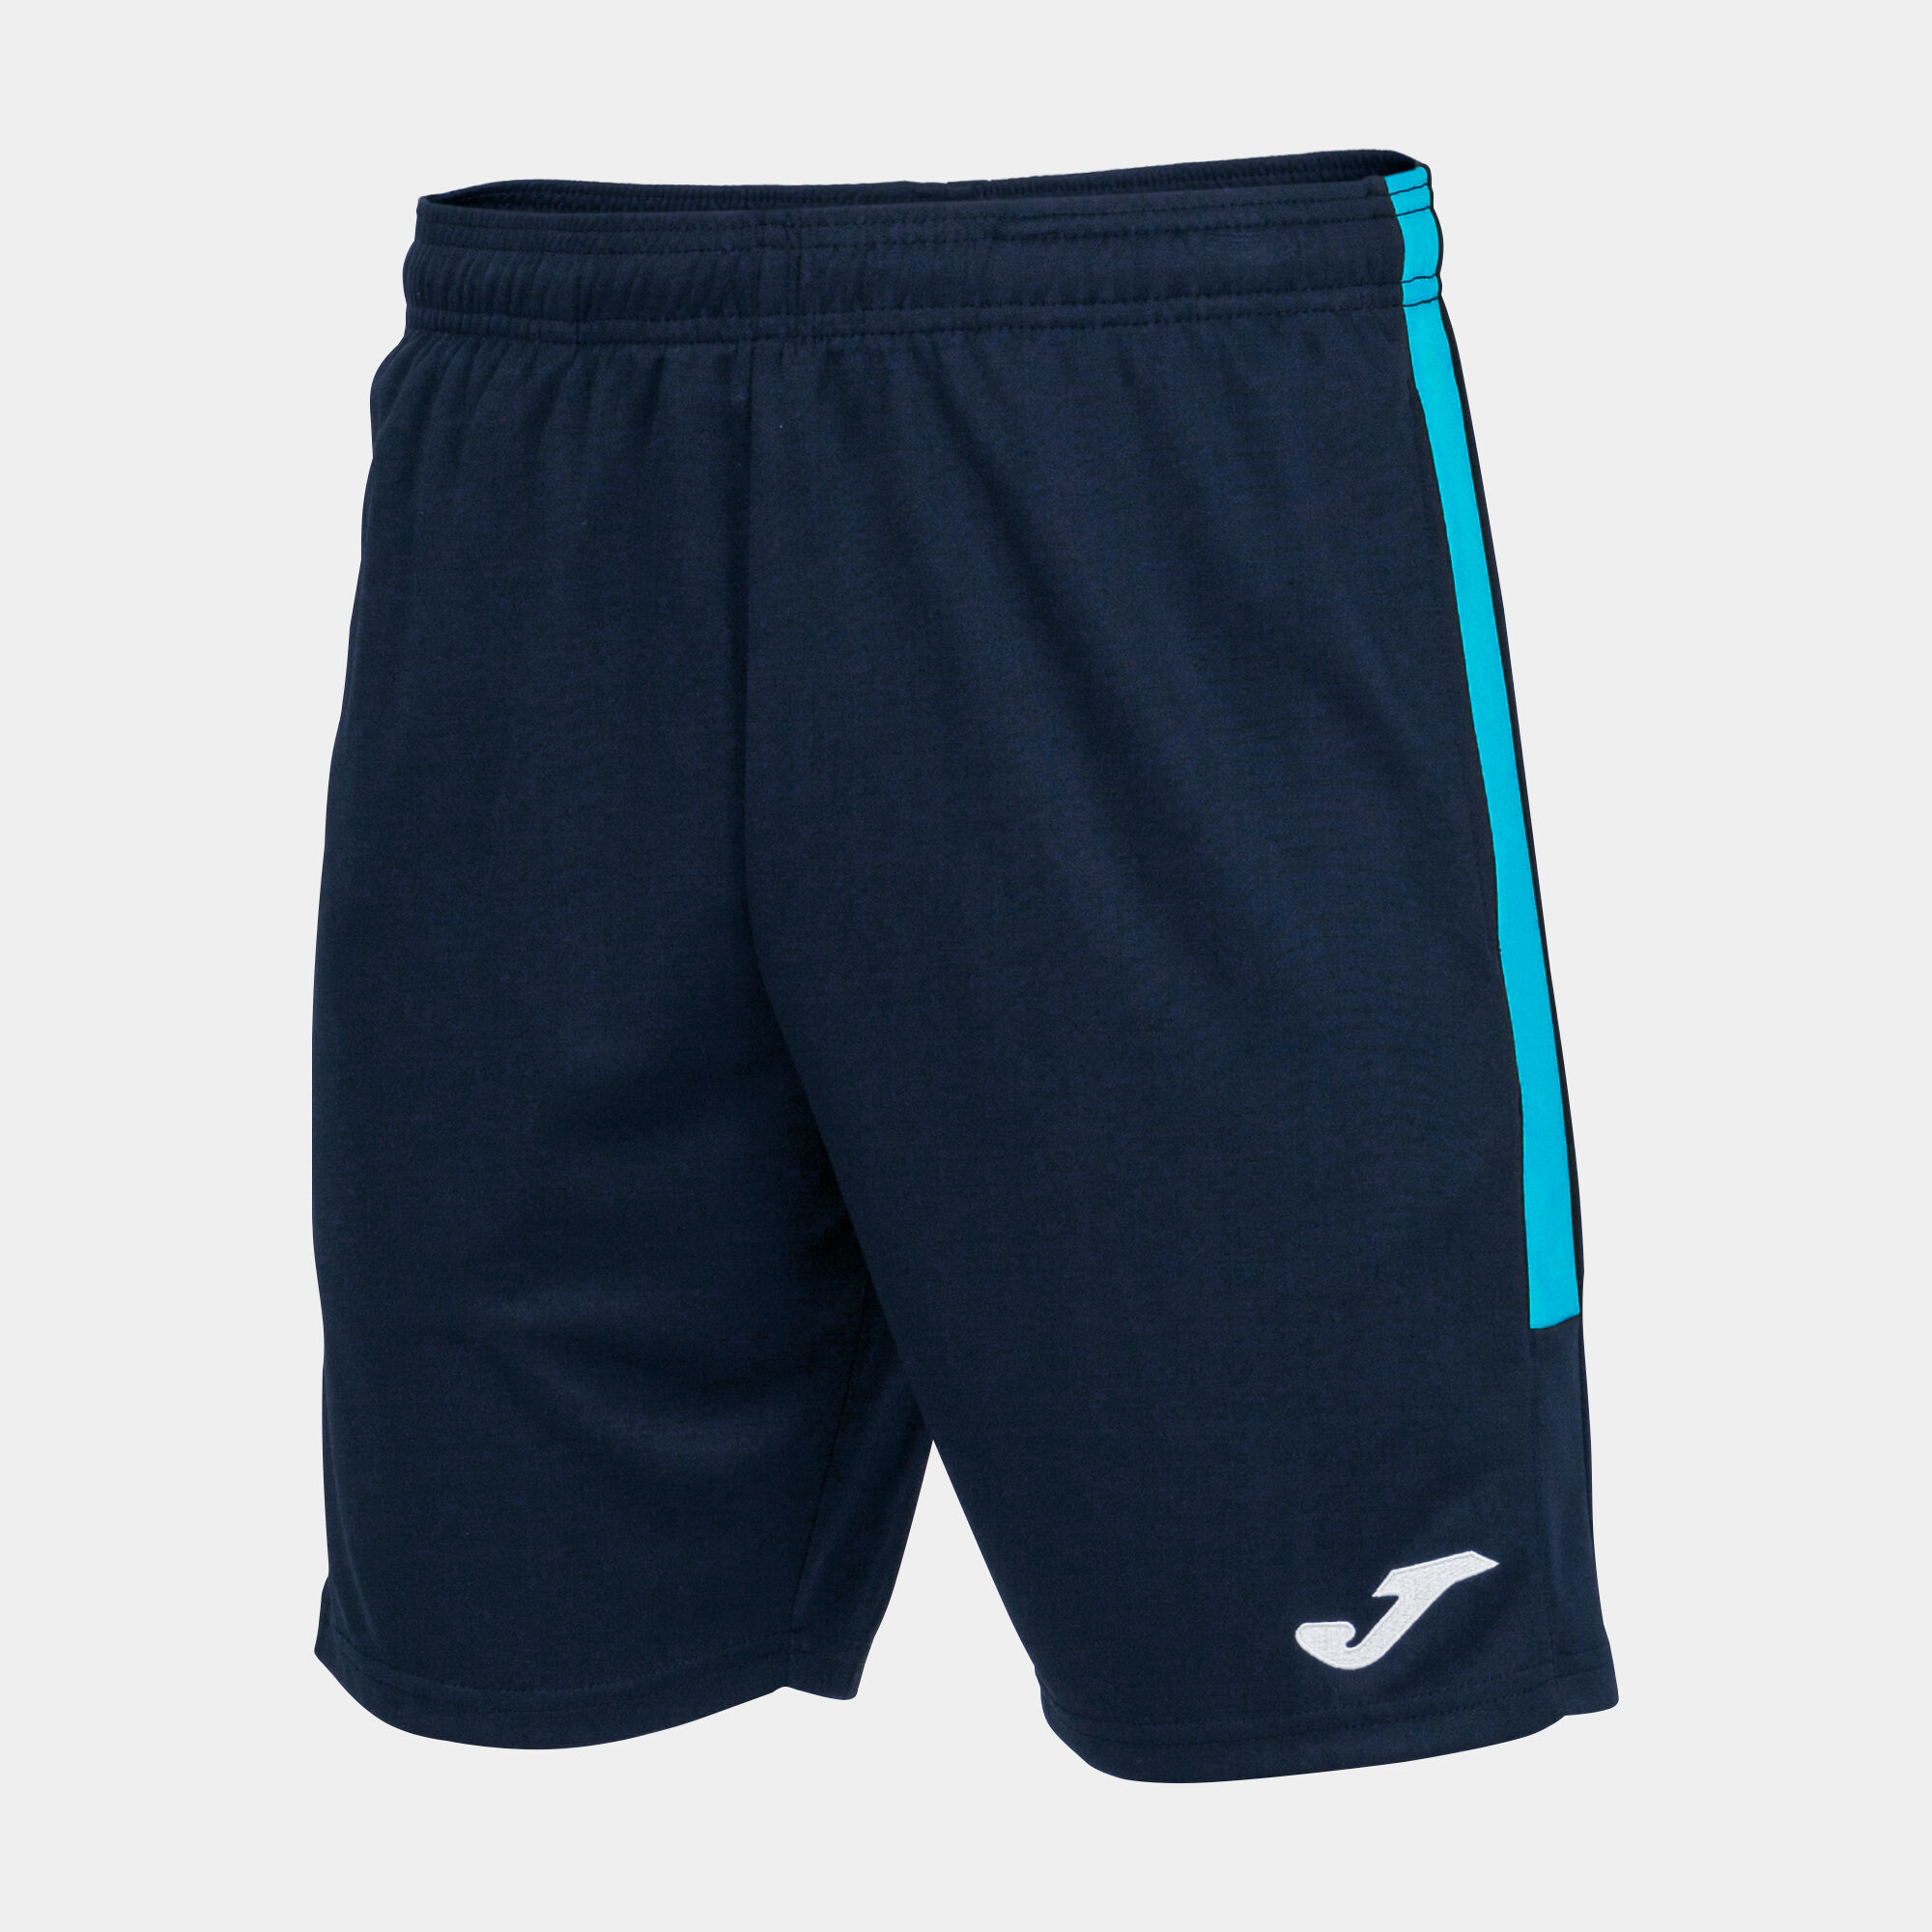 Bermuda shorts man Eco Championship navy blue fluorescent turquoise